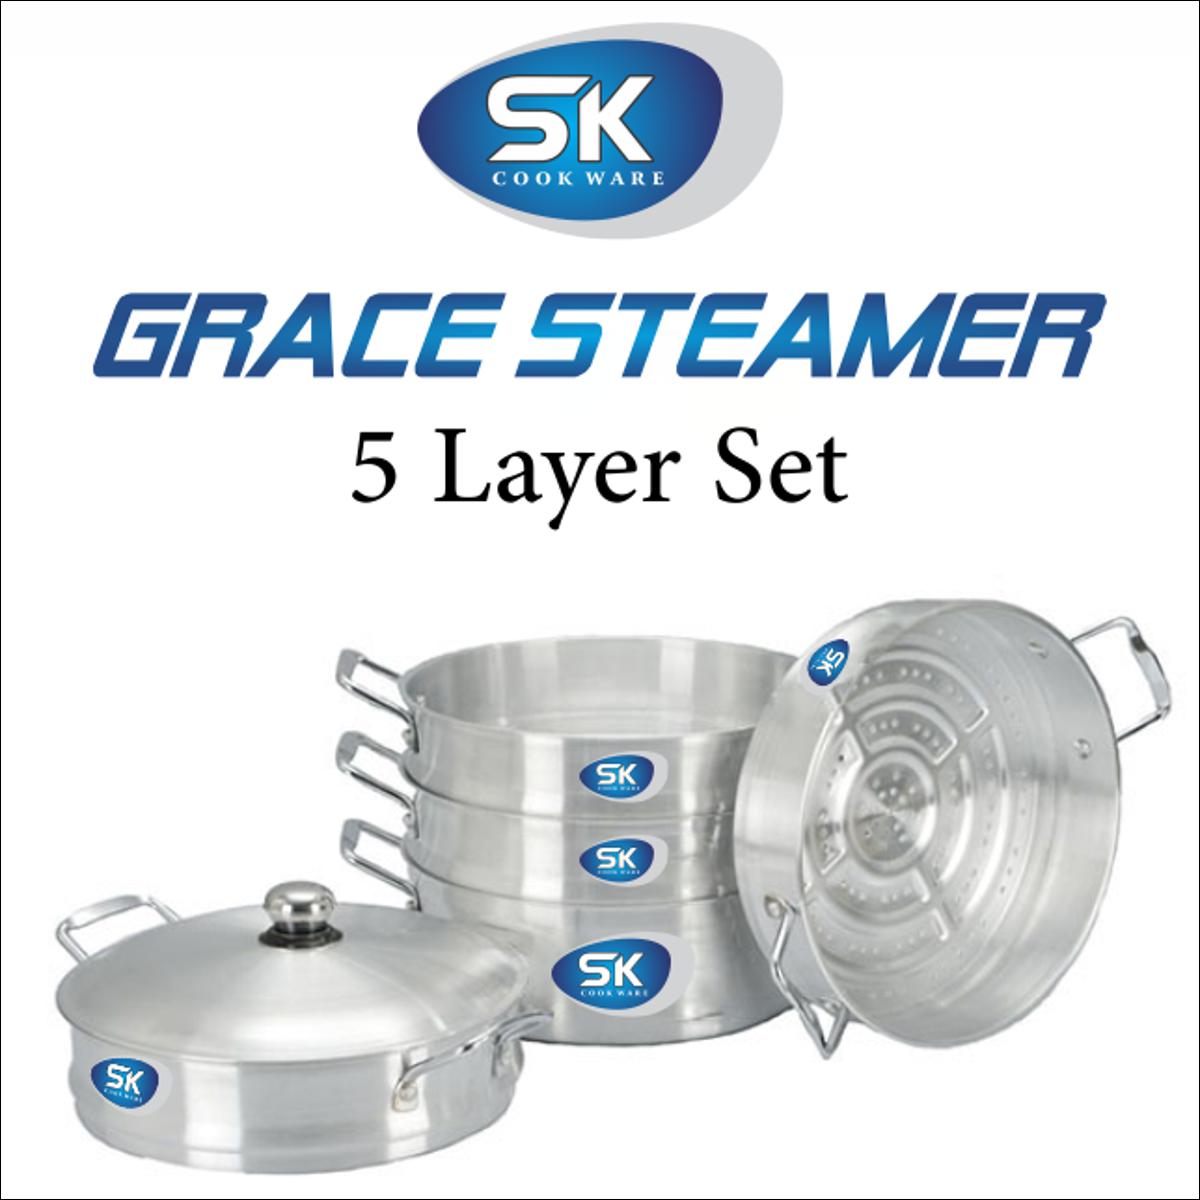 5 Layer SK Steamer Set Price in Pakistan